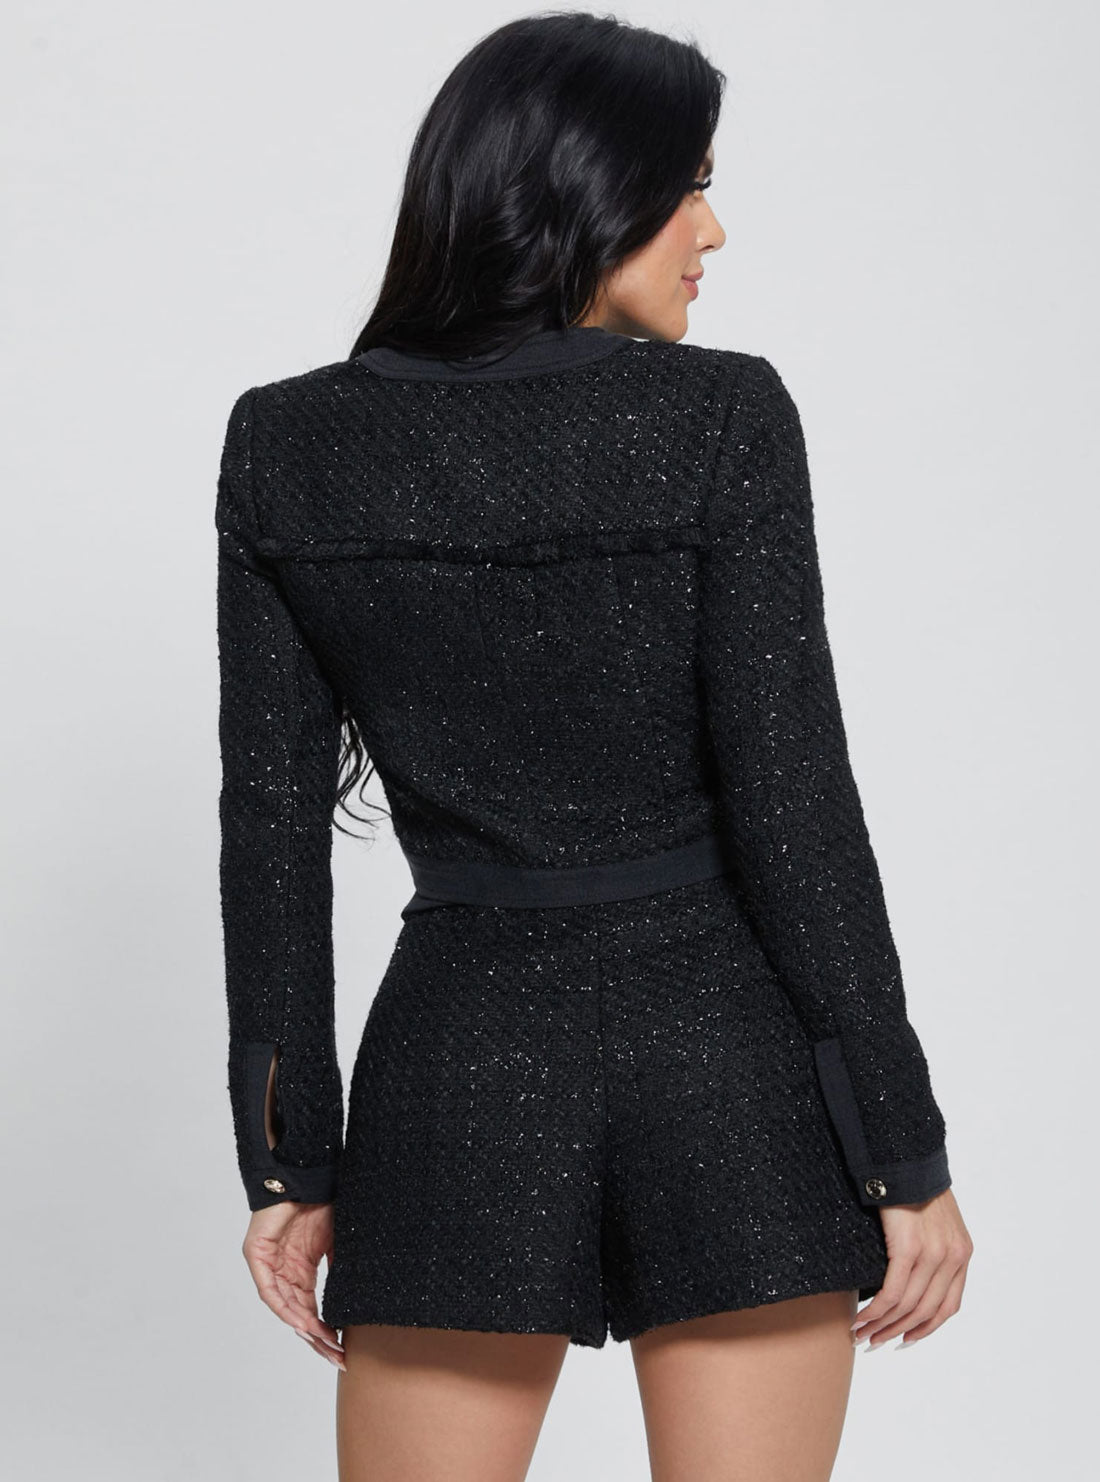 Black Clarissa Metallic Tweed Jacket | GUESS Women's Apparel | back view